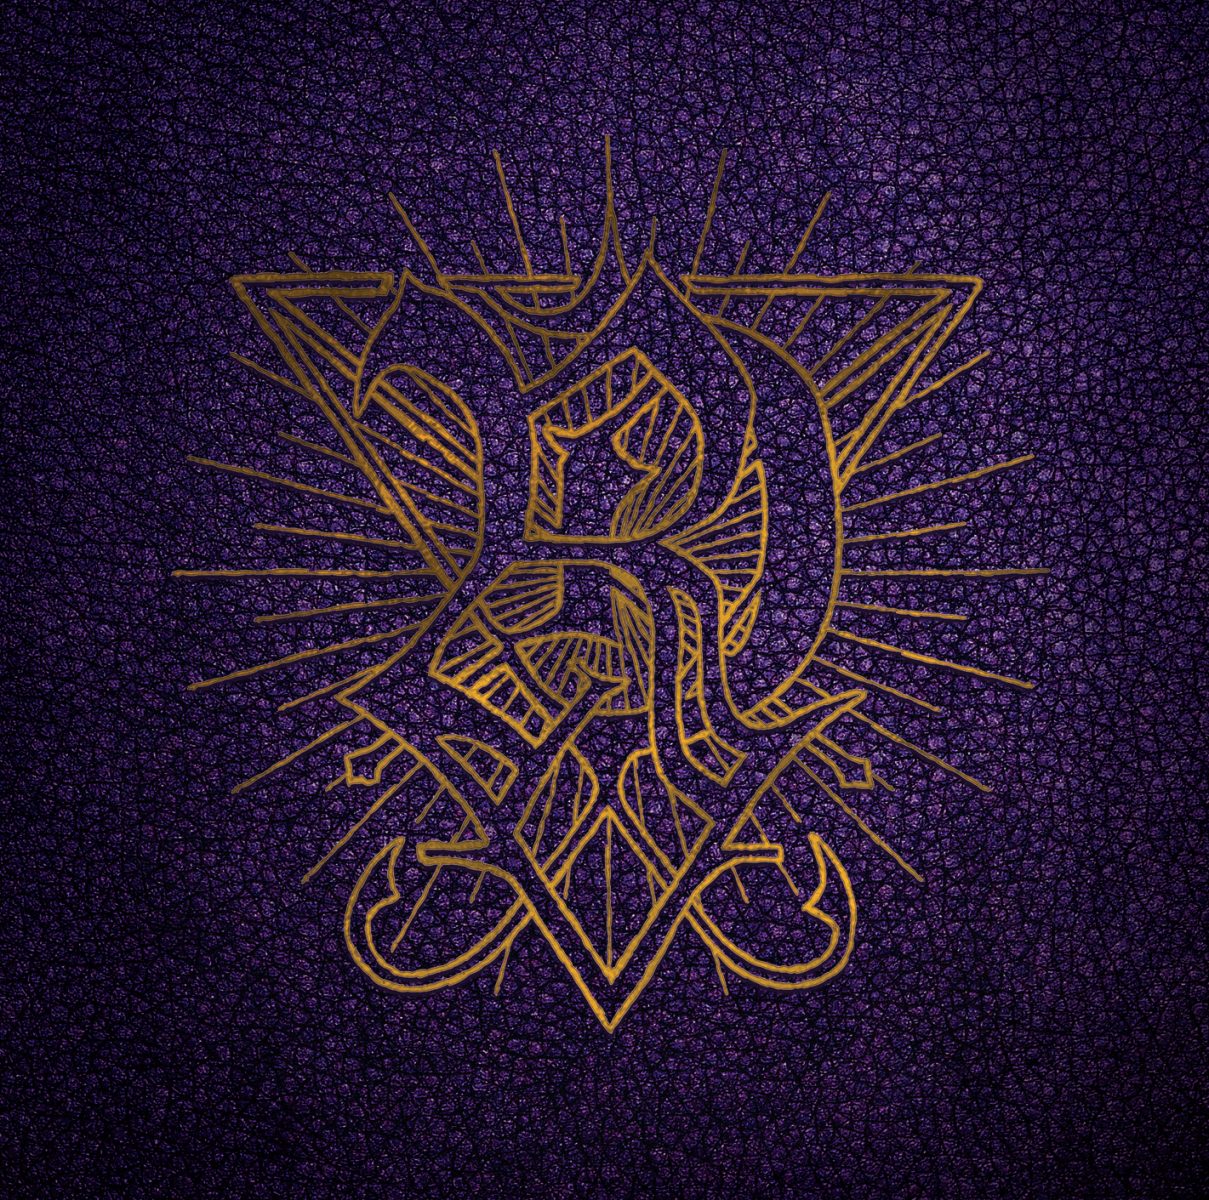 ritual-dictates-give-in-to-despair-soundtrack-fuer-das-okkulte-ritual-album-review